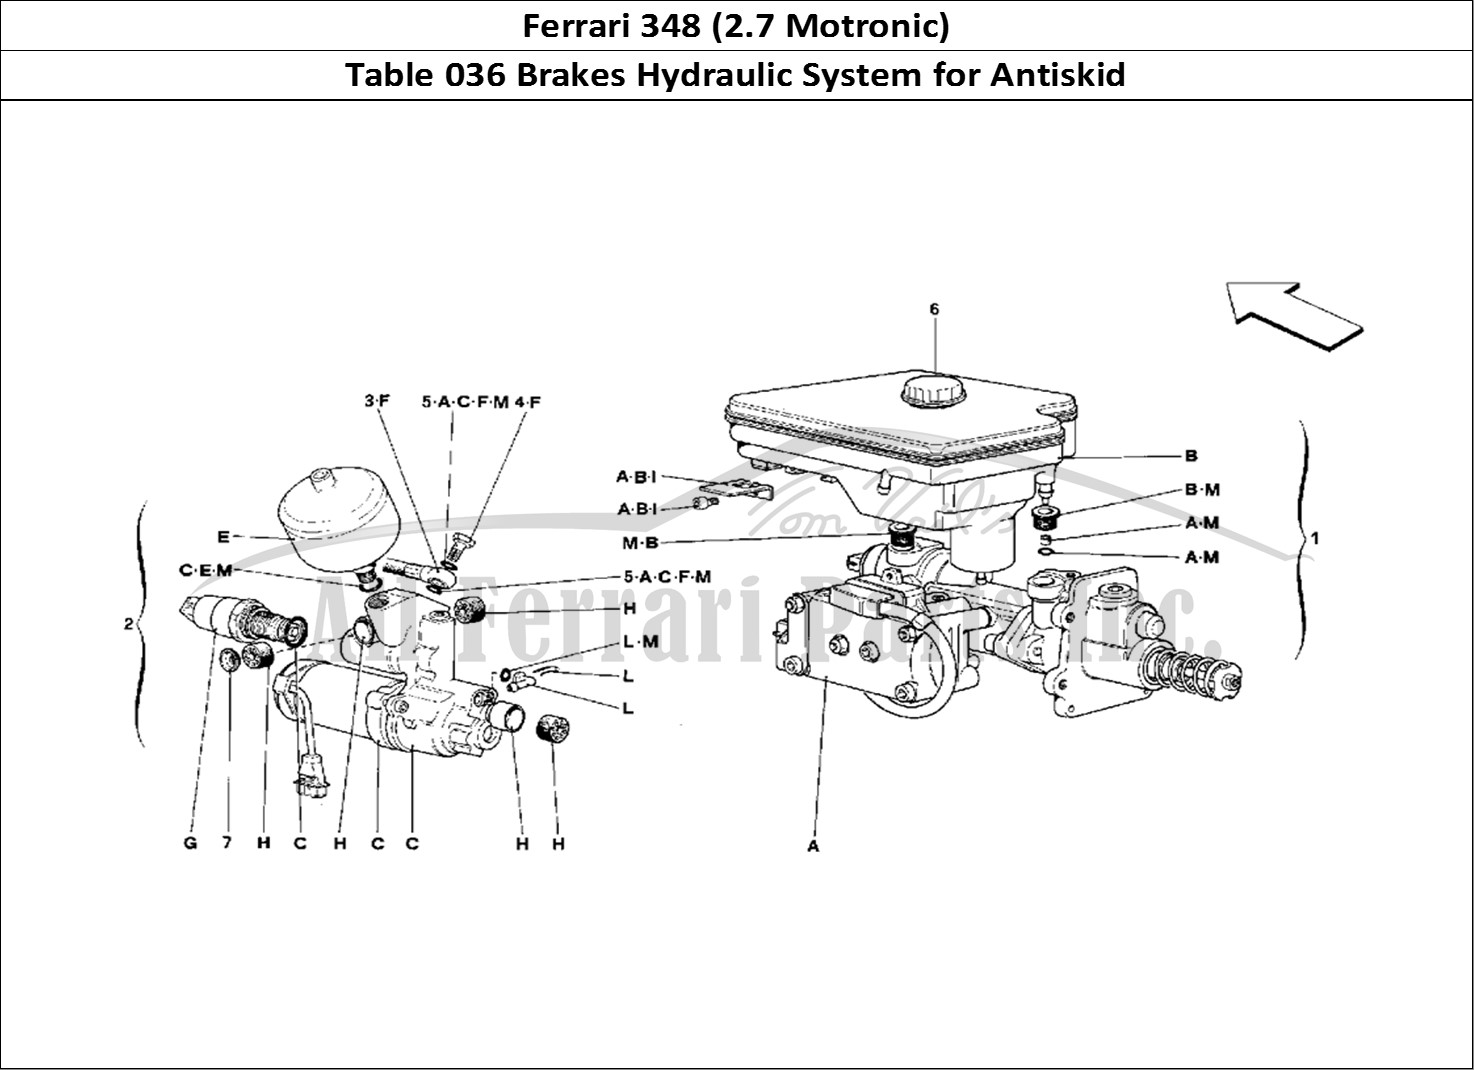 Ferrari Parts Ferrari 348 (2.7 Motronic) Page 036 Hydraulic System for Anti